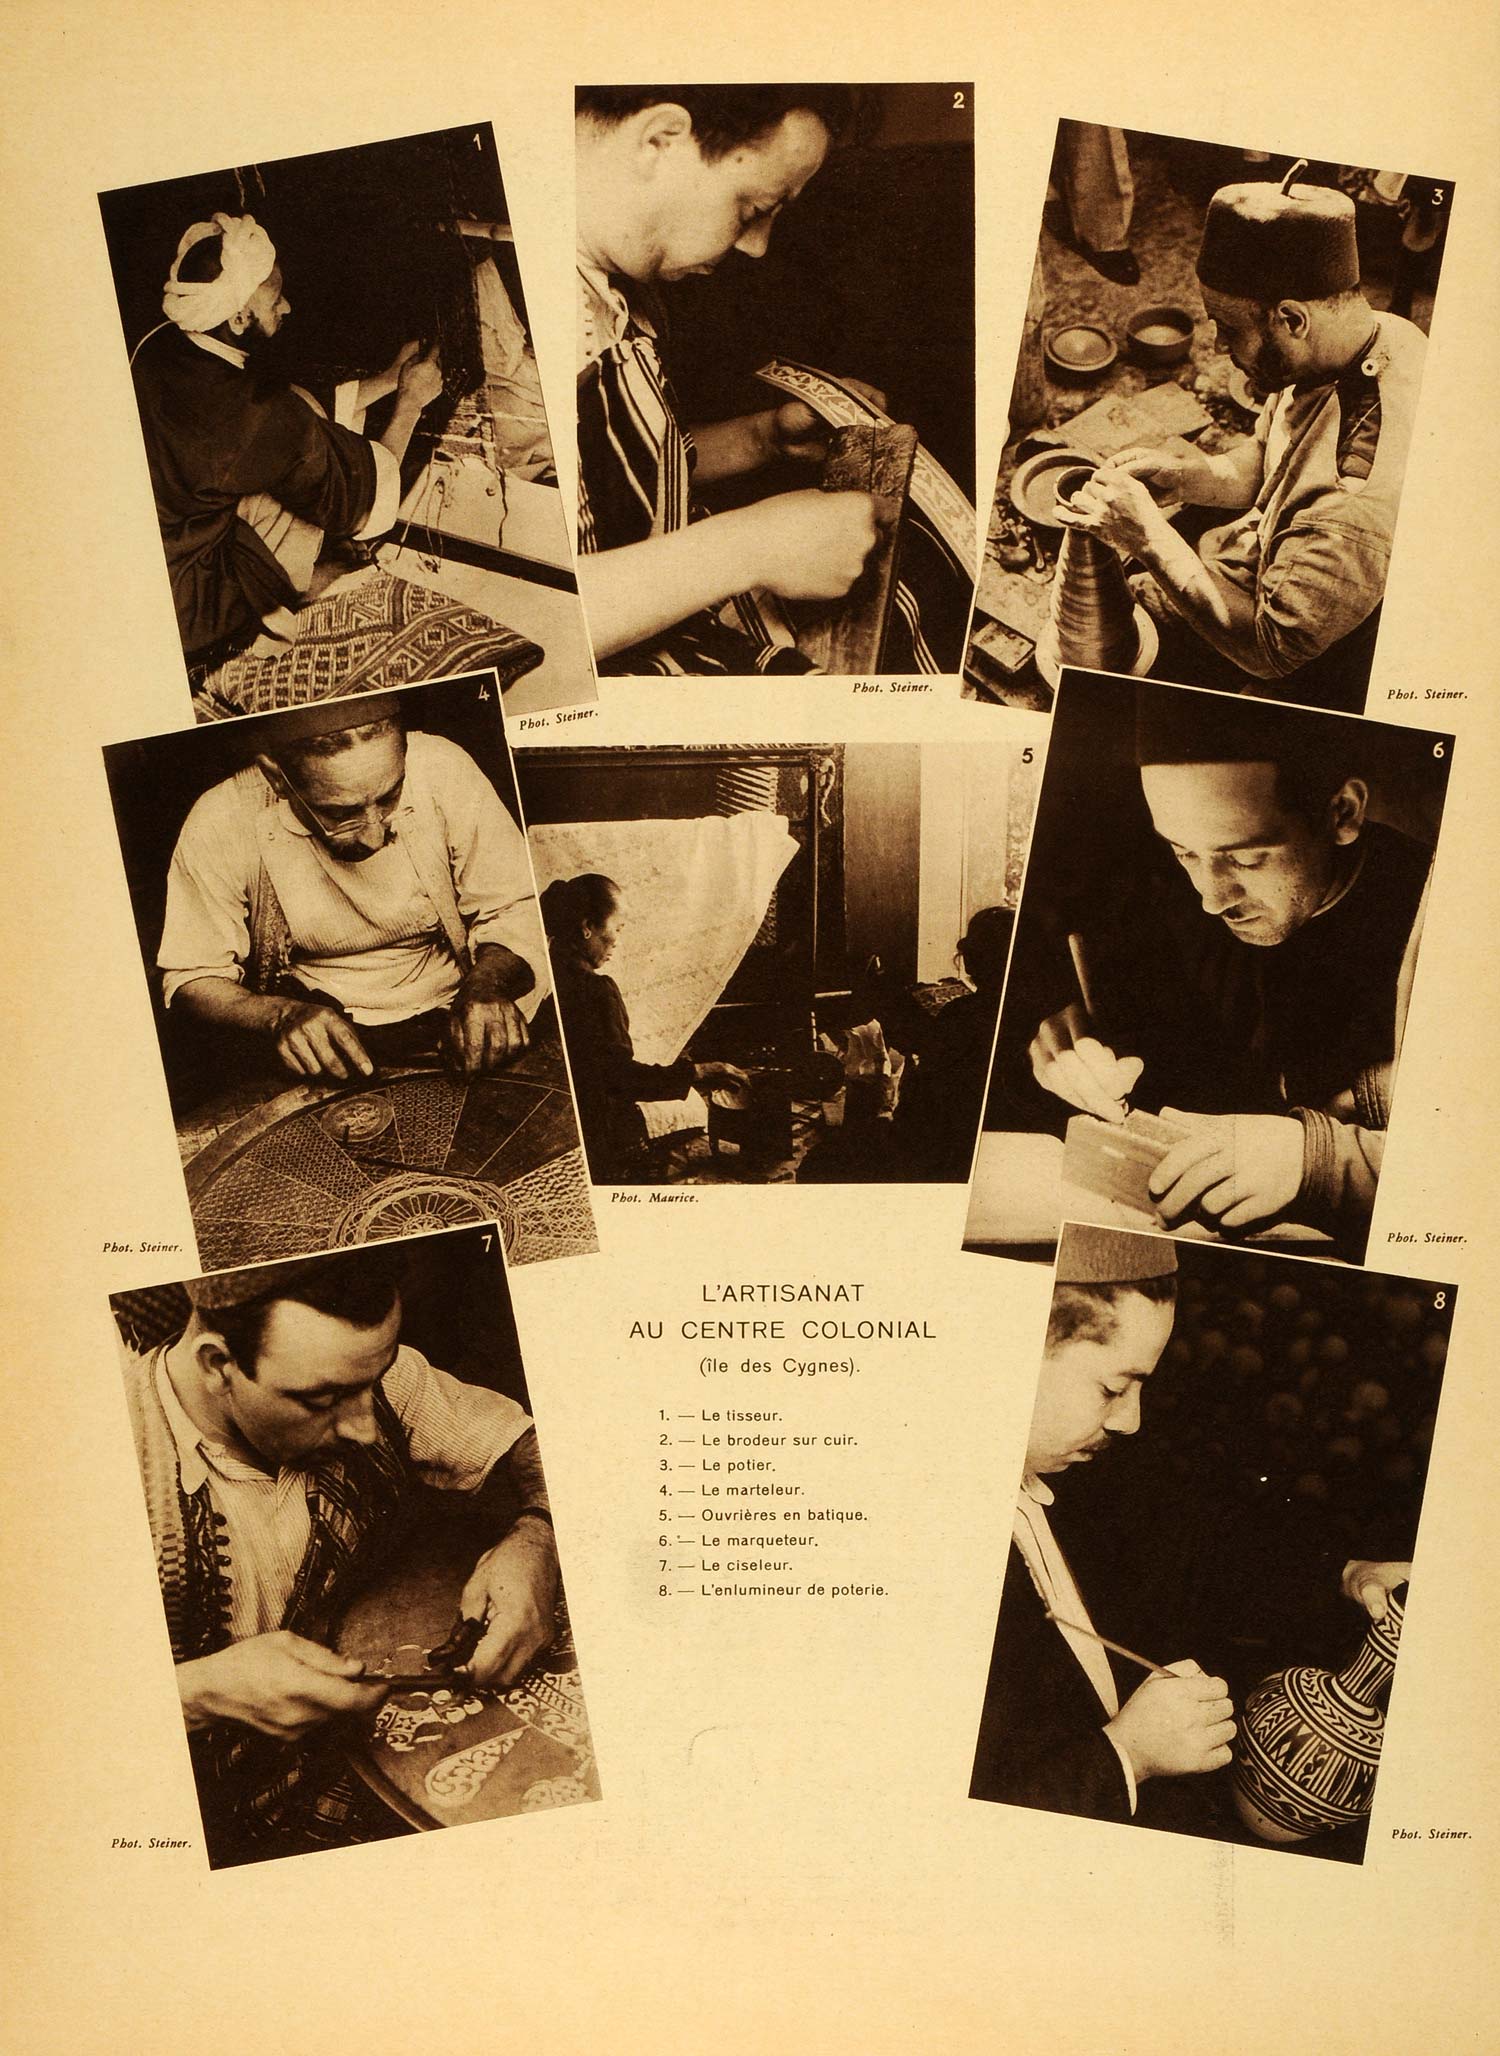 1937 Print Paris Exposition Crafts Artisans Workers Pottery Weaving Batik ILL7